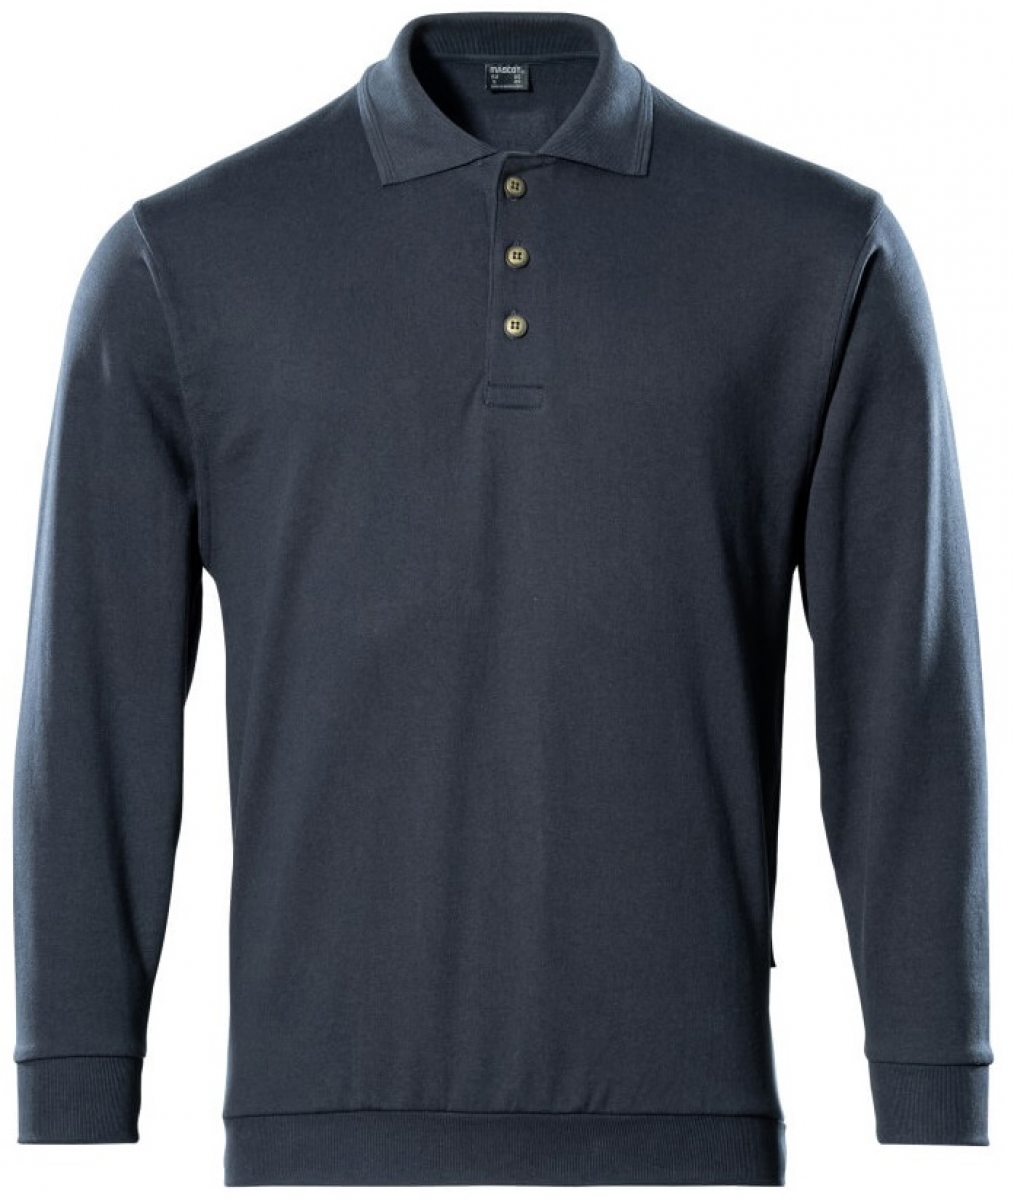 MASCOT-Worker-Shirts, Polo-Sweatshirt, Trinidad, 310 g/m, schwarzblau